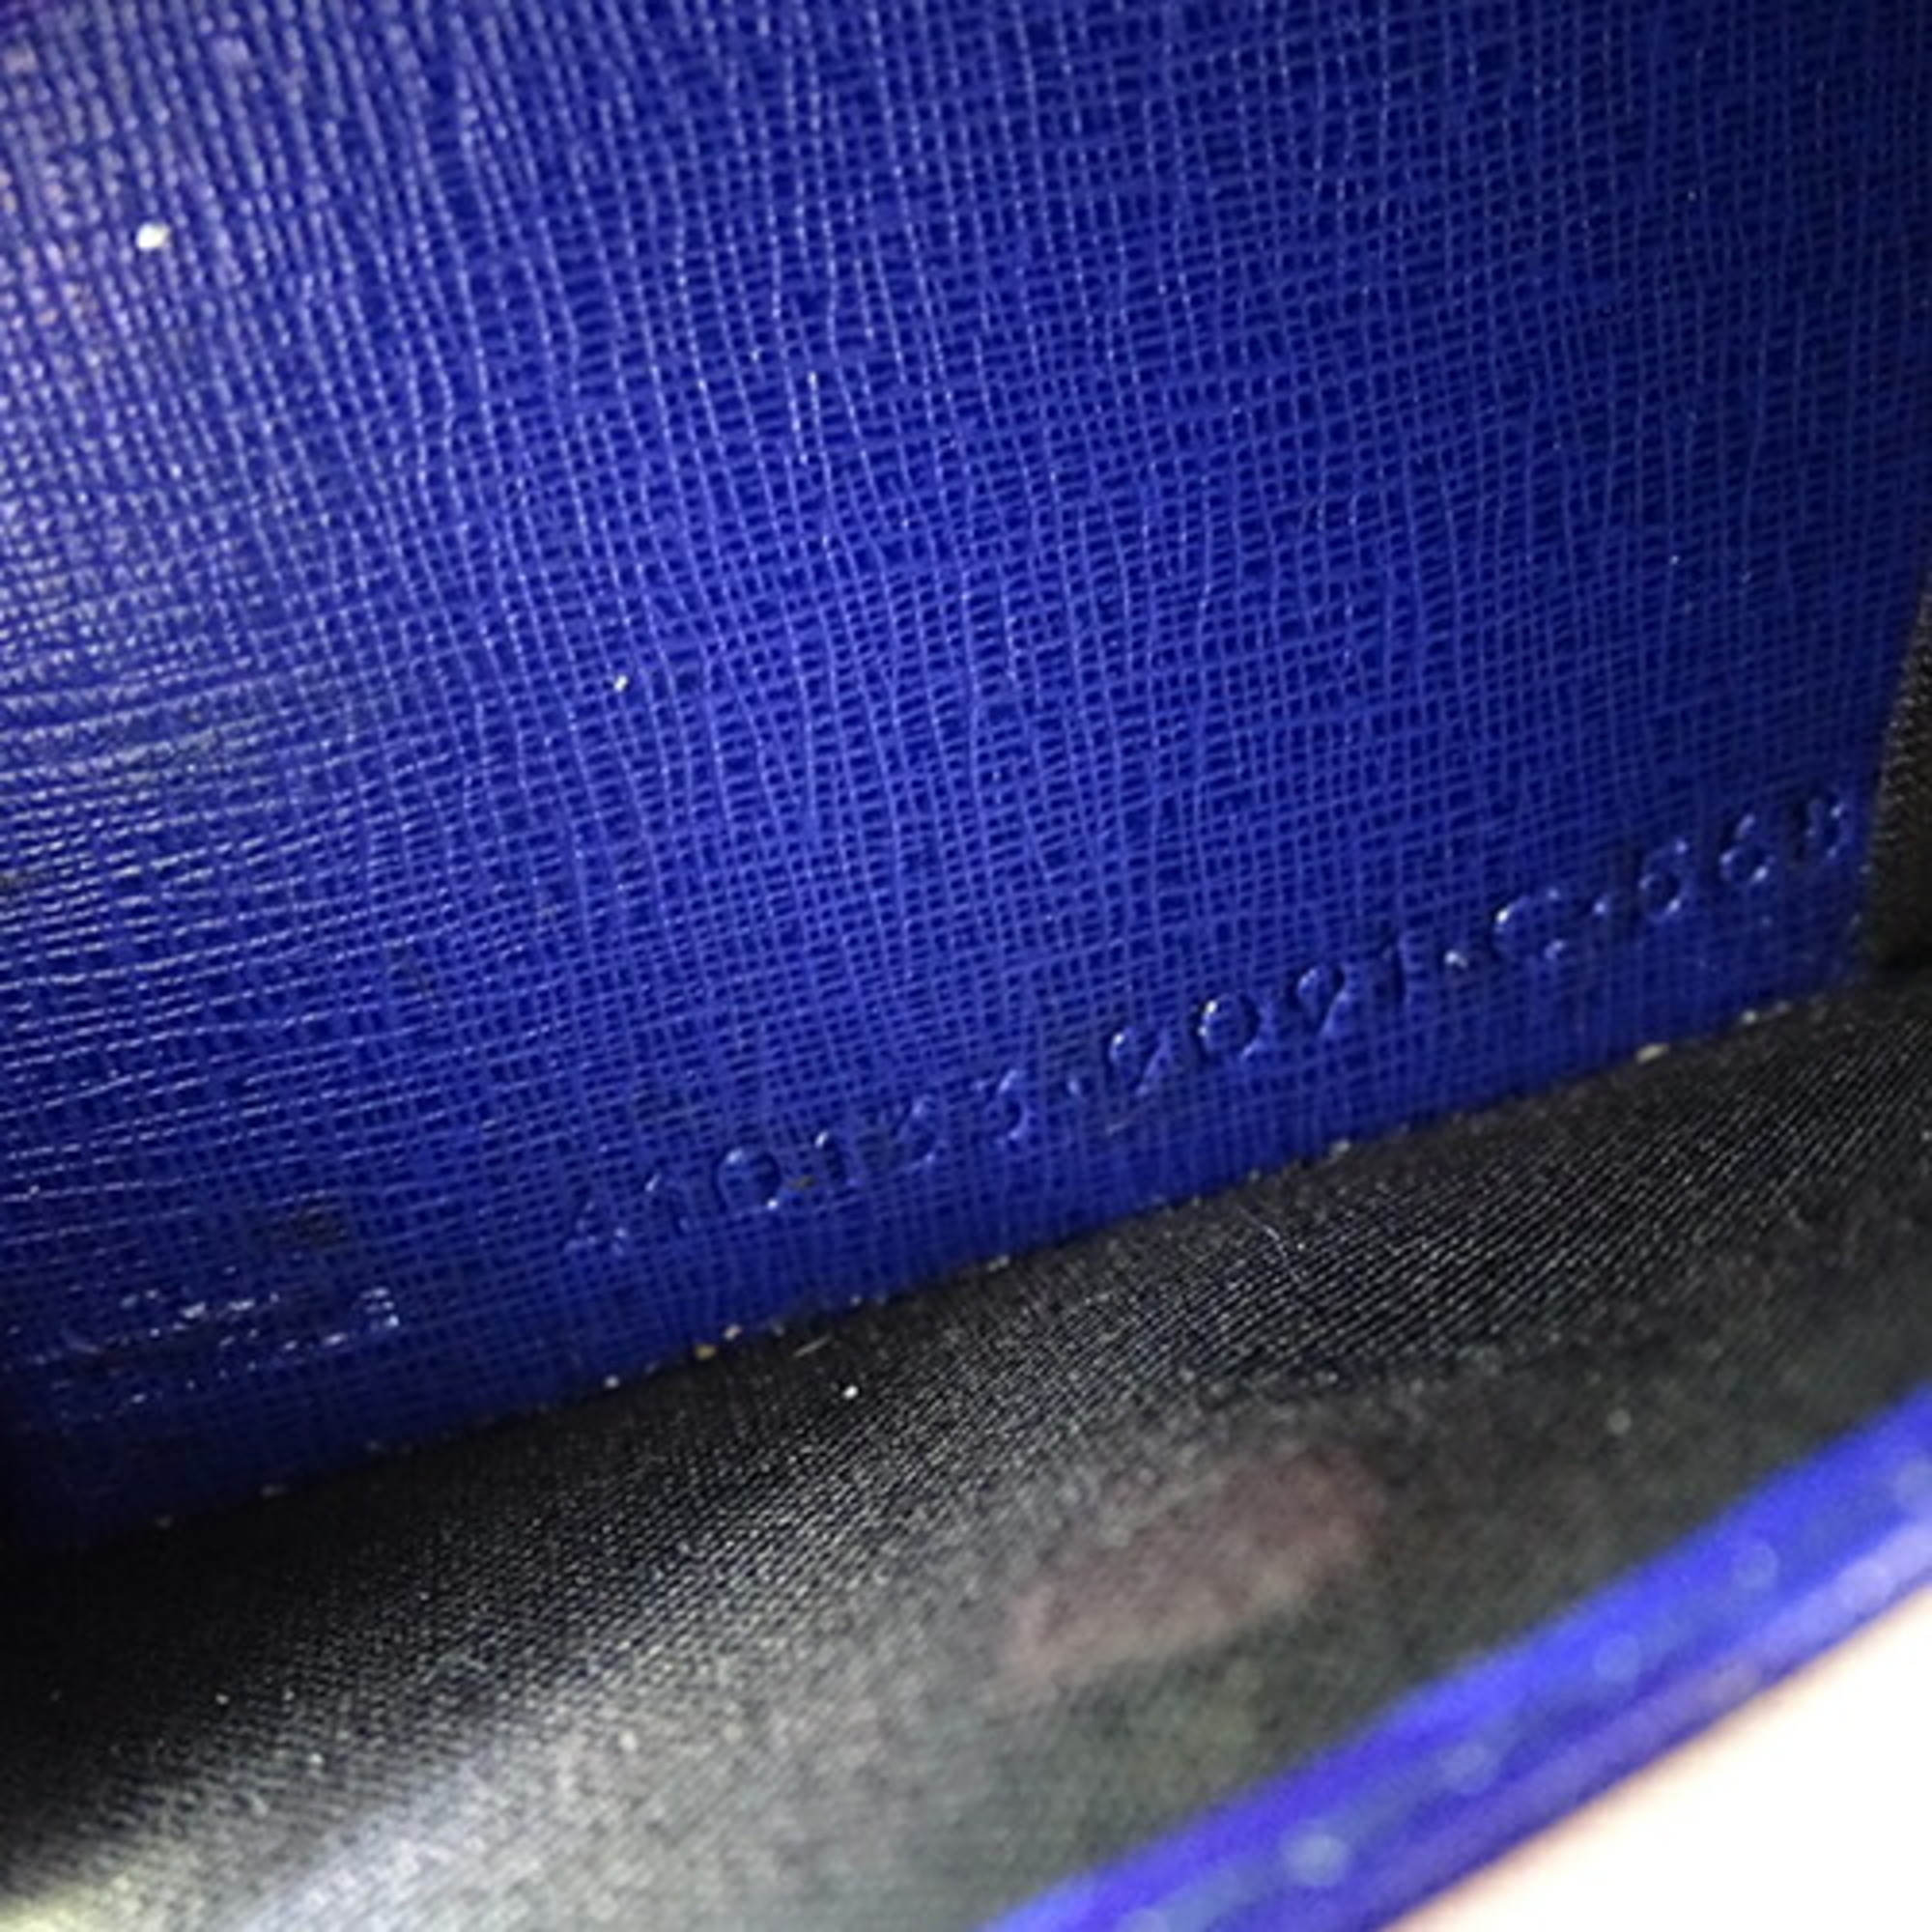 BALENCIAGA Wallet Women's Men's Trifold Leather Essential Blue White 410133 Compact